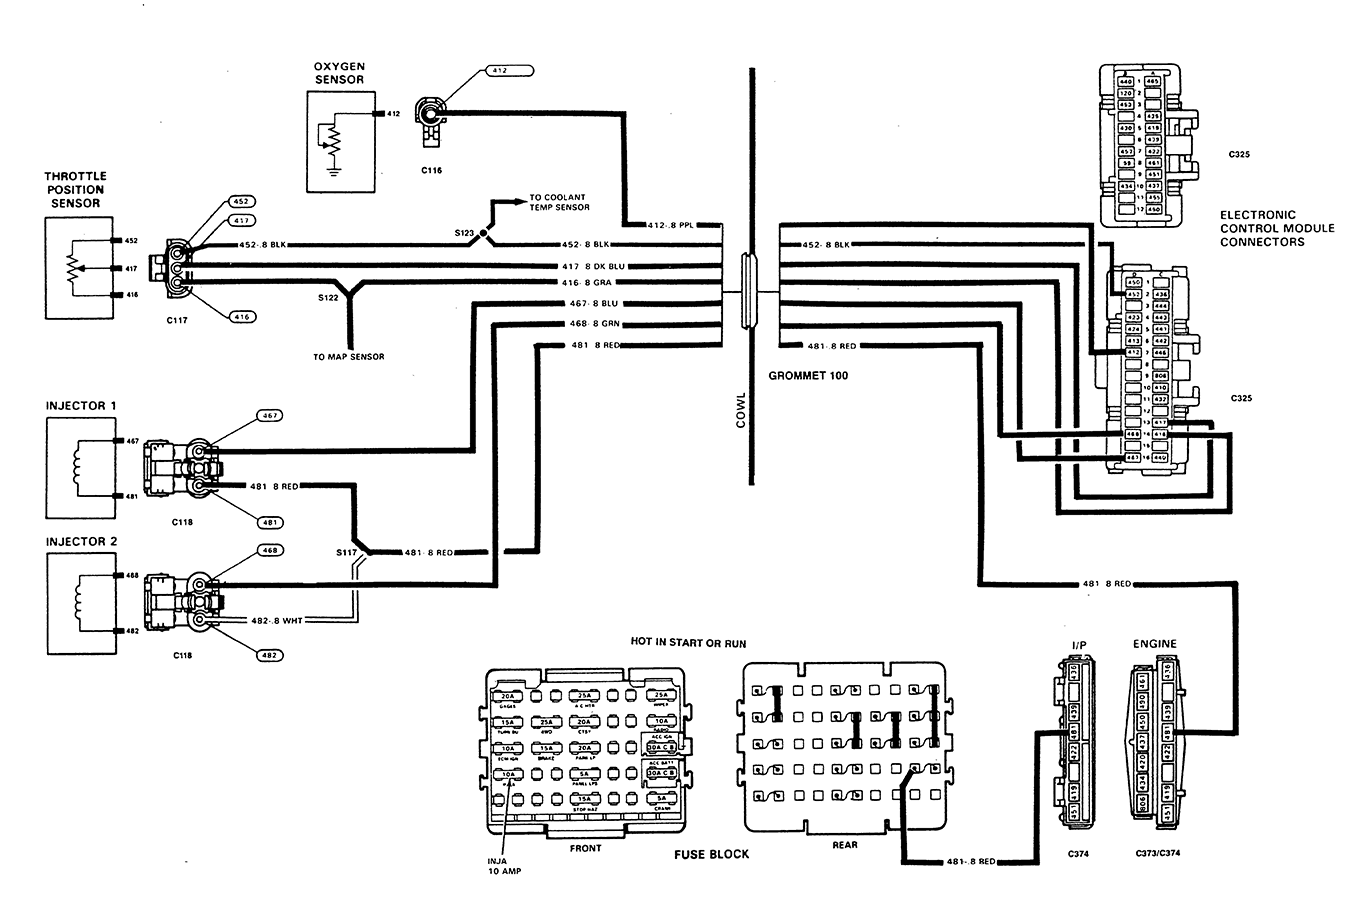 Diagram] E46 O2 Sensor Wiring Diagram Full Version Hd